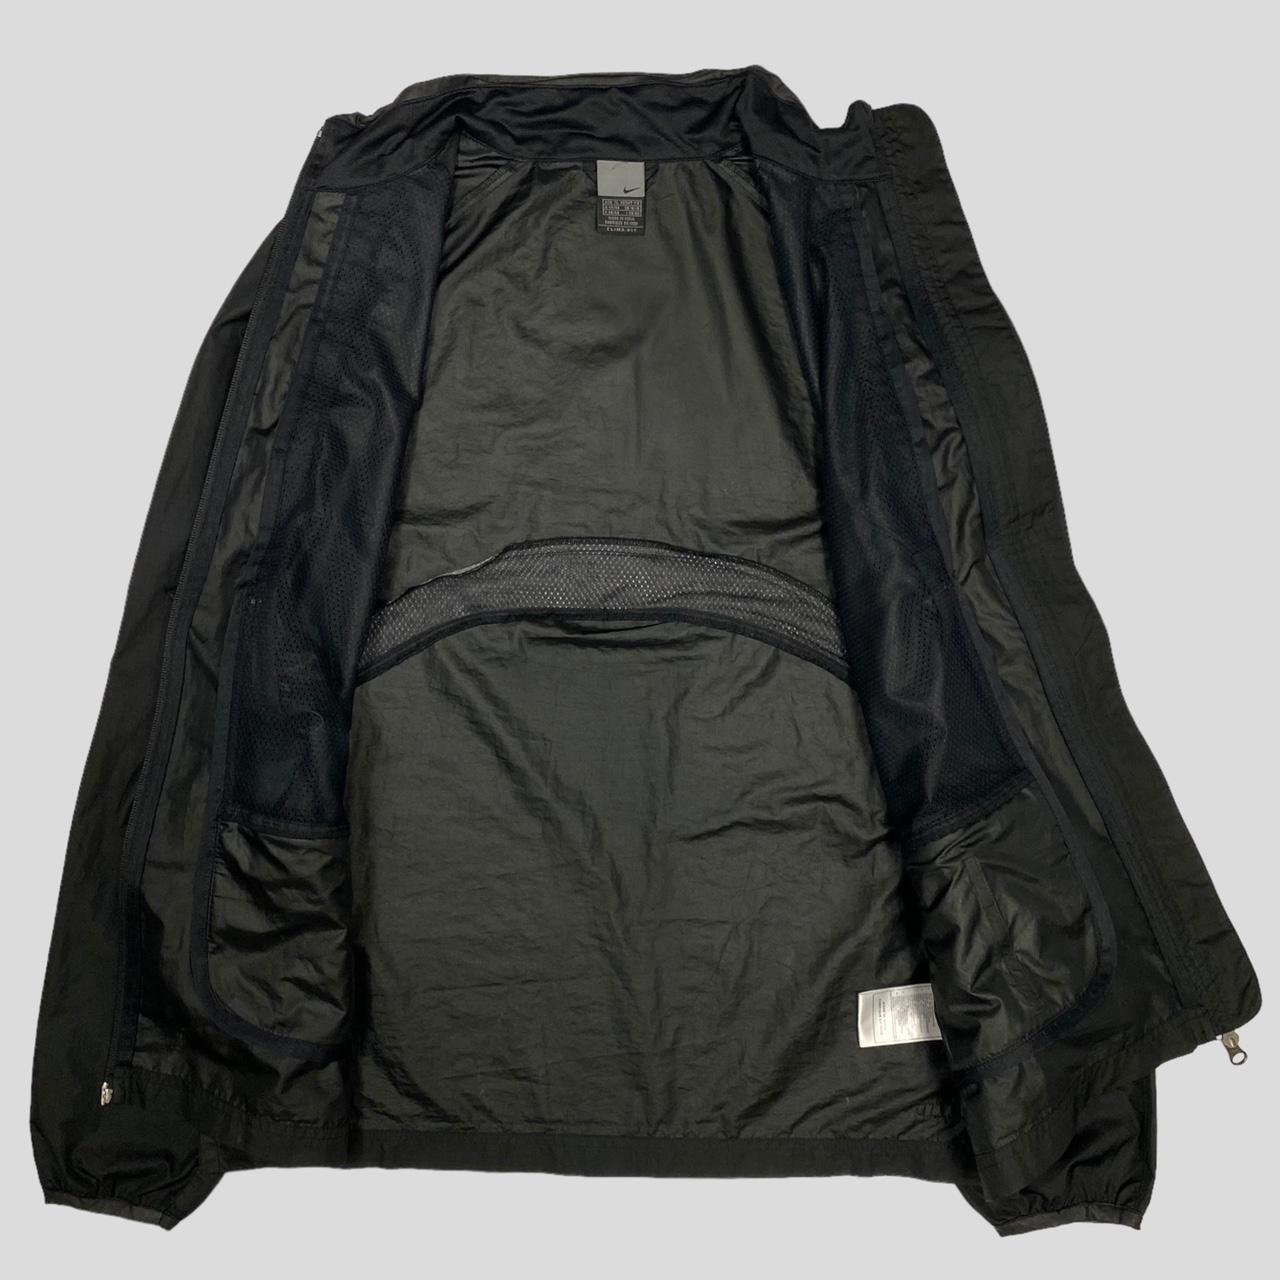 Nike SS02 Butterfly Clima-fit Jacket - XL (L) Nike... - Depop